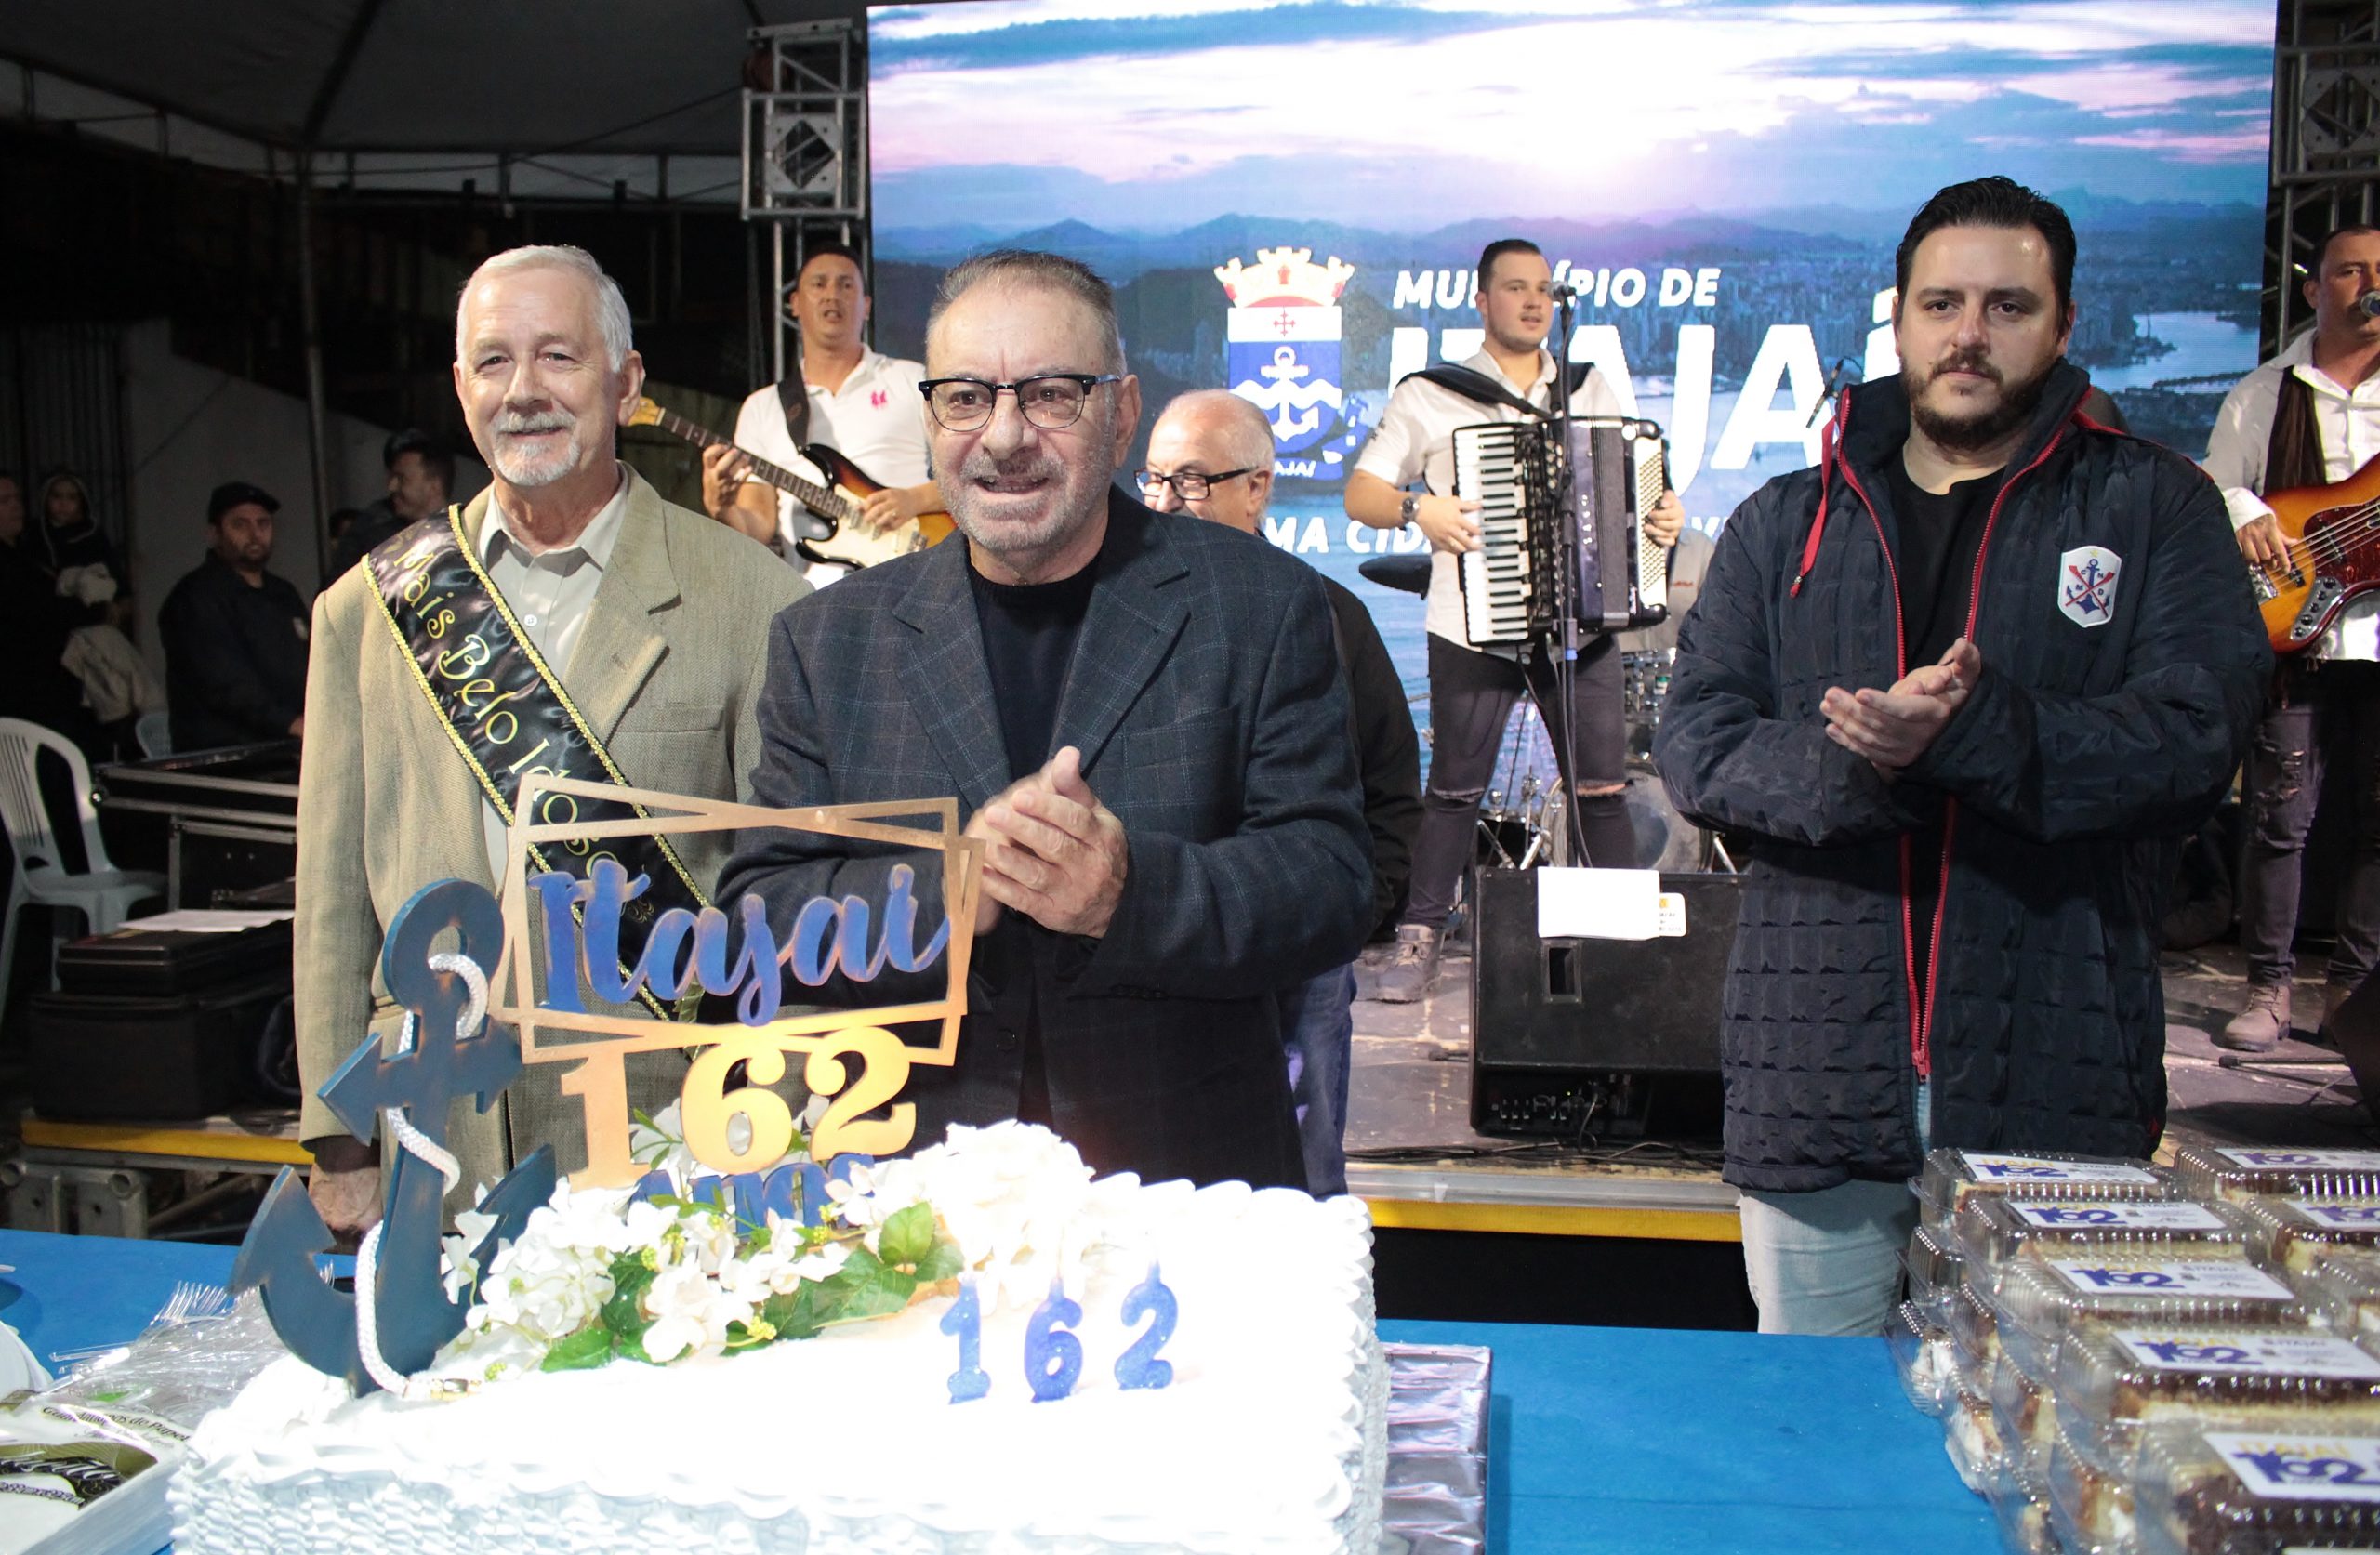 Aniversário de Itajaí: Comunidade do Cidade Nova participa de corte do bolo de ‘162 anos de Itajaí’